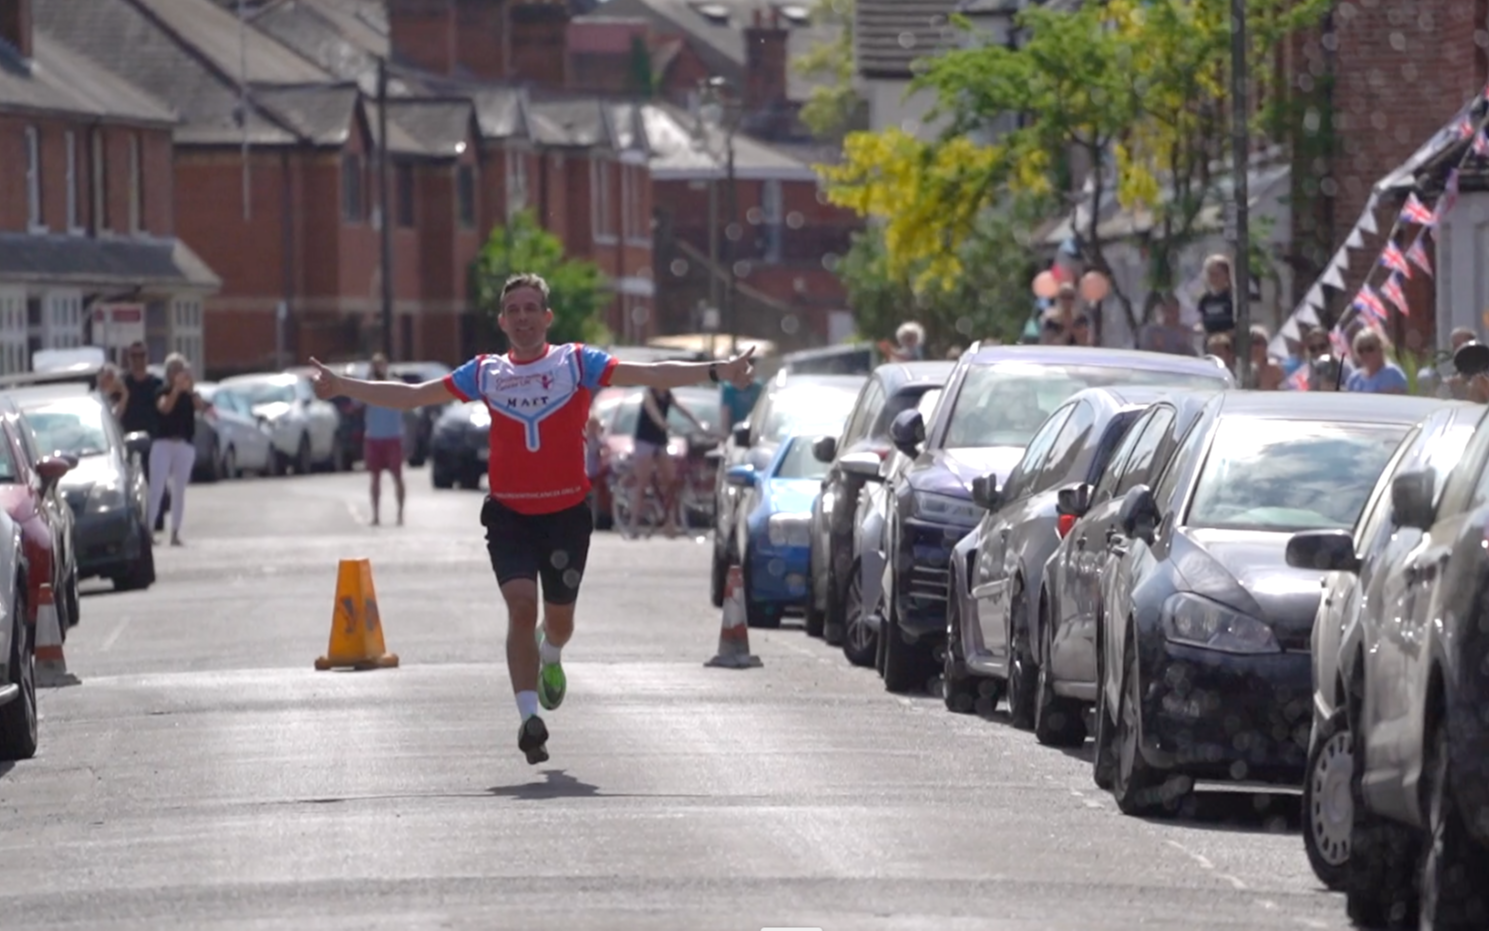 Matt Thomas completes his neighbourhood marathon